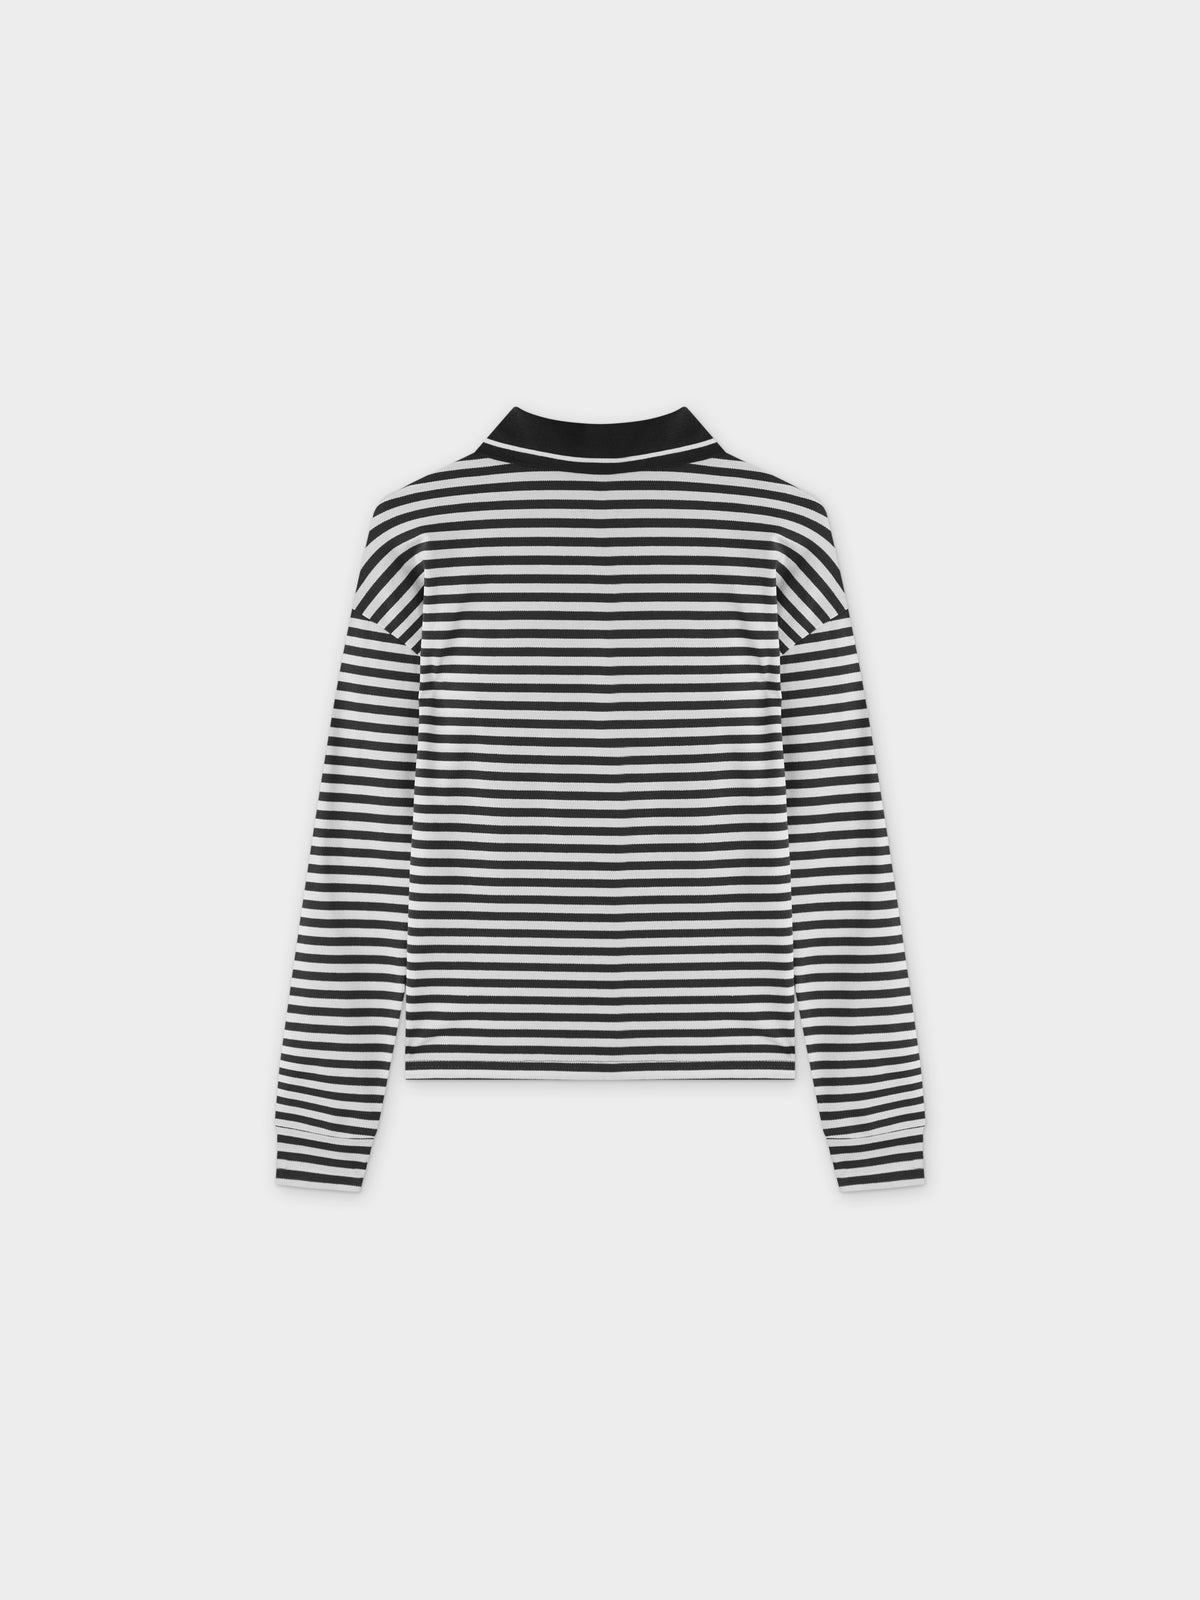 Striped Collar Tee-Black/White